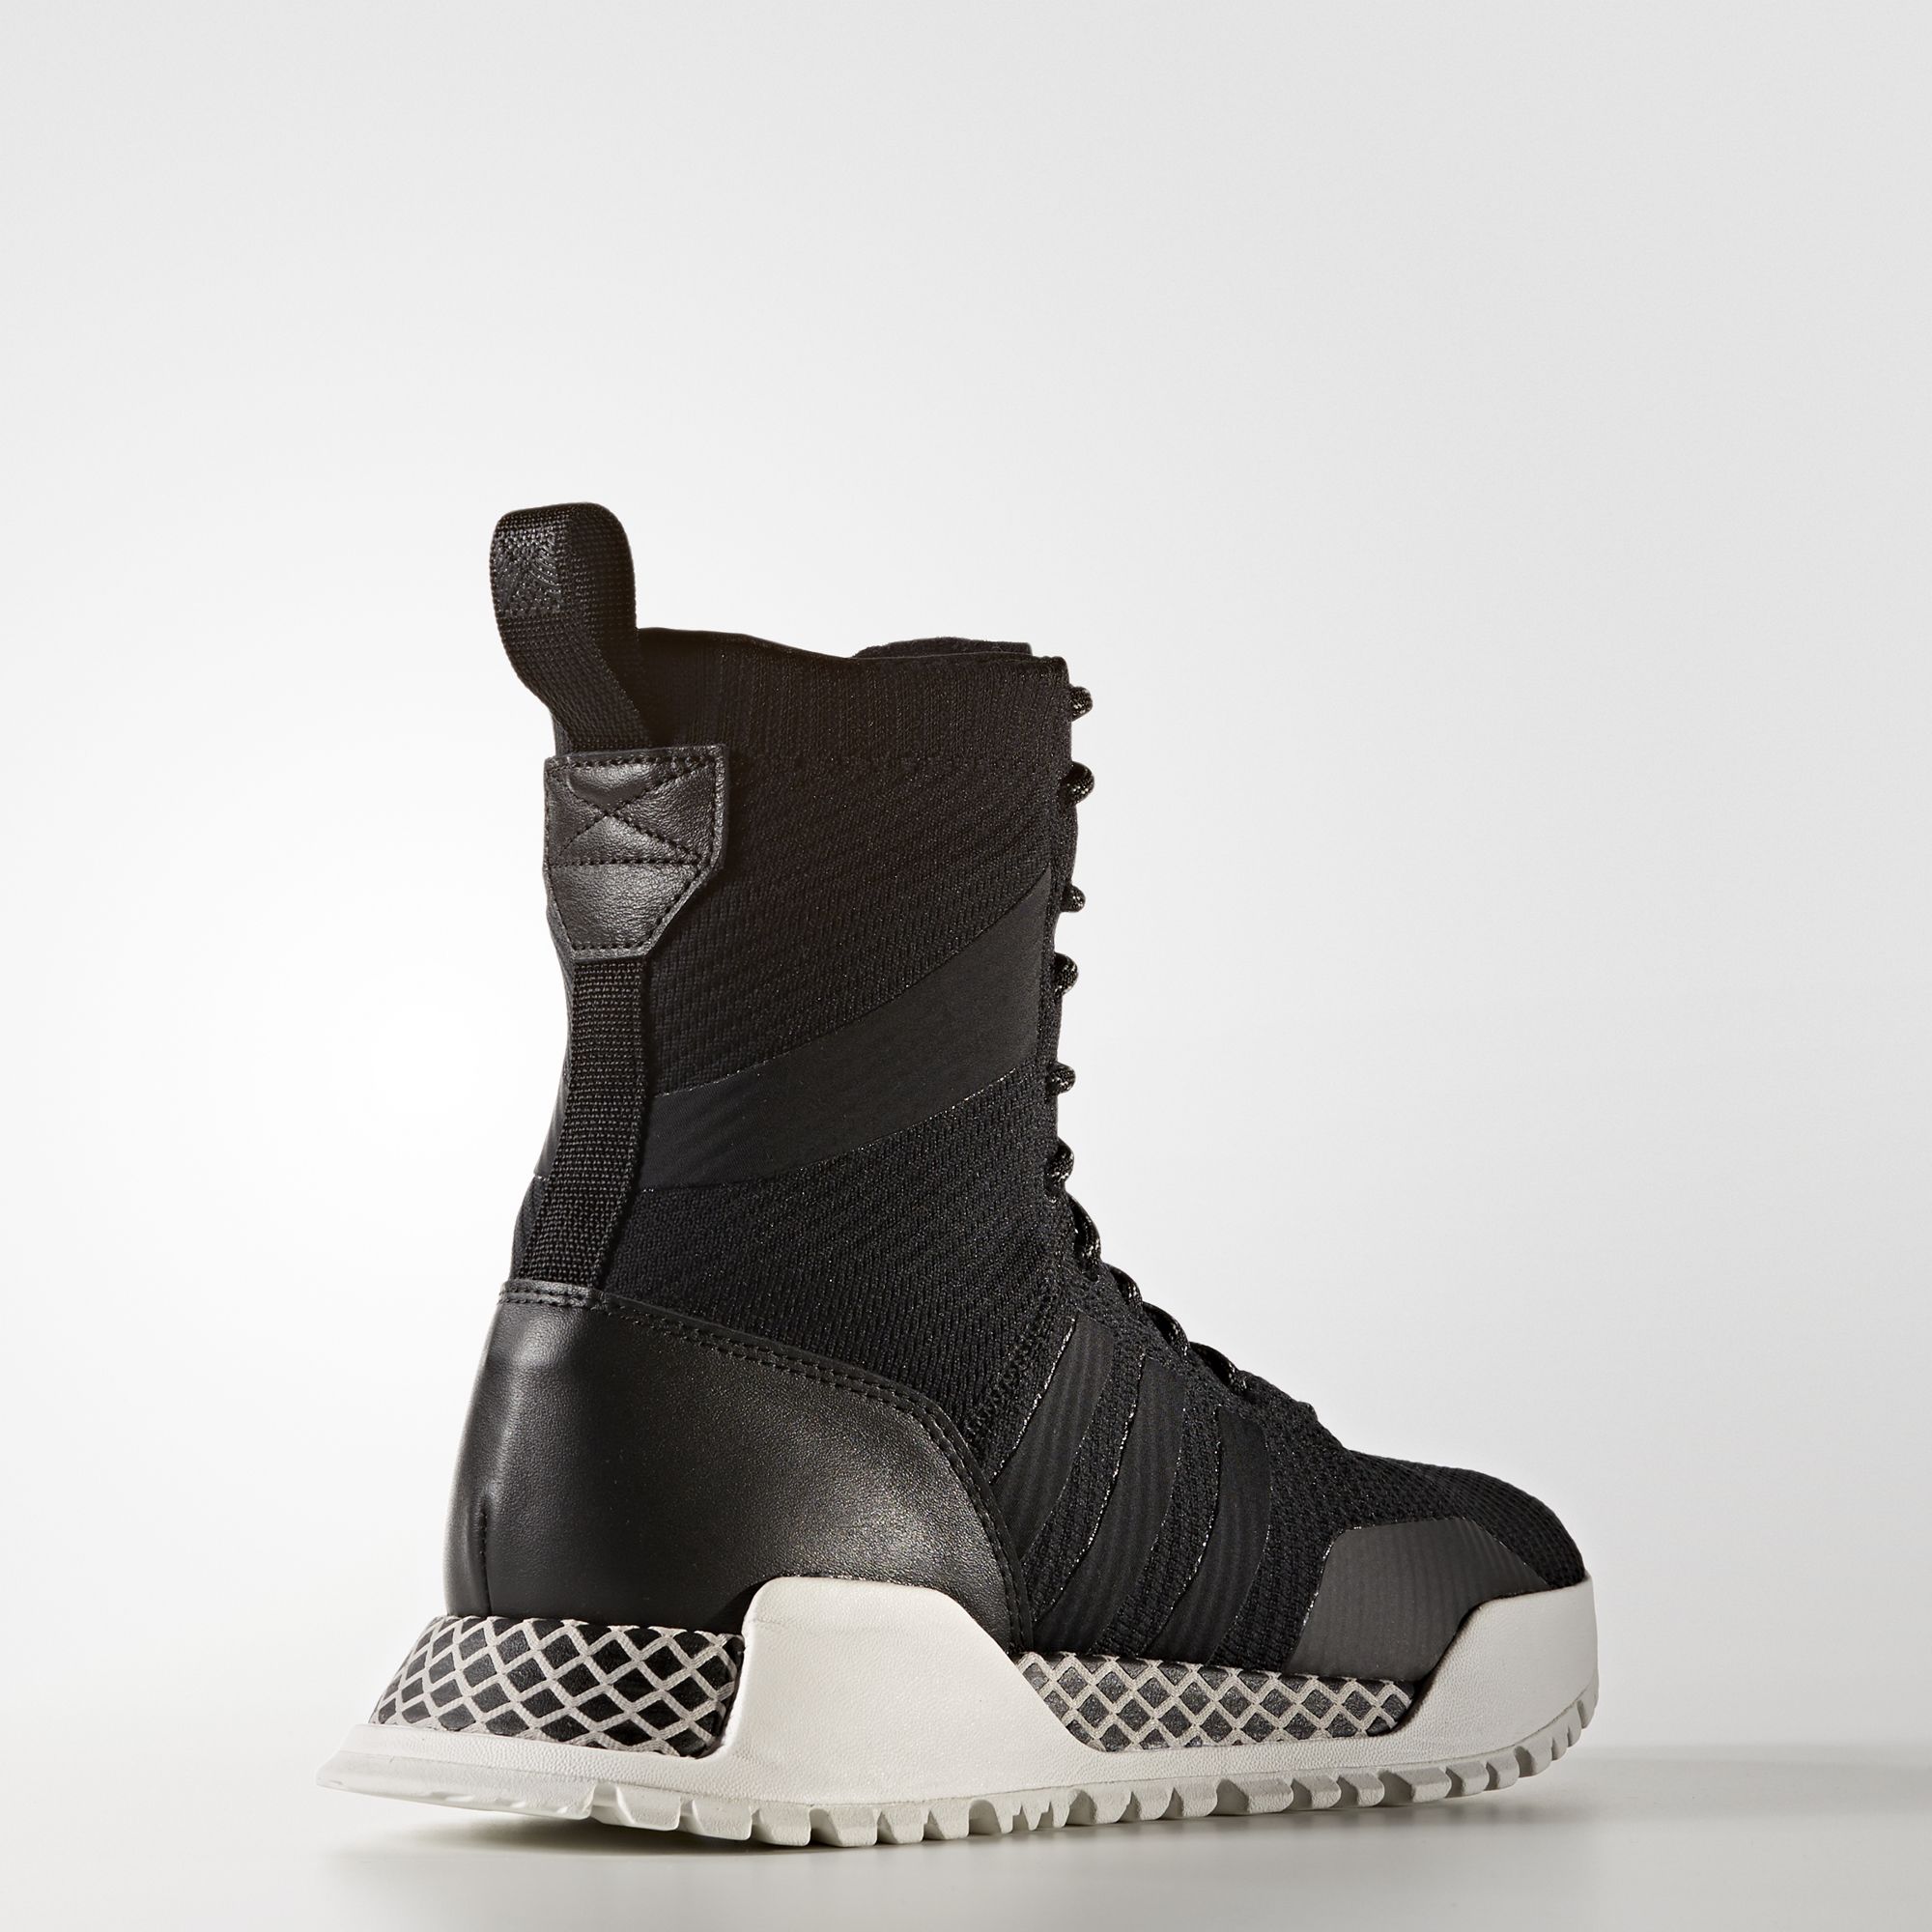 adidas af 1.3 primeknit boots review